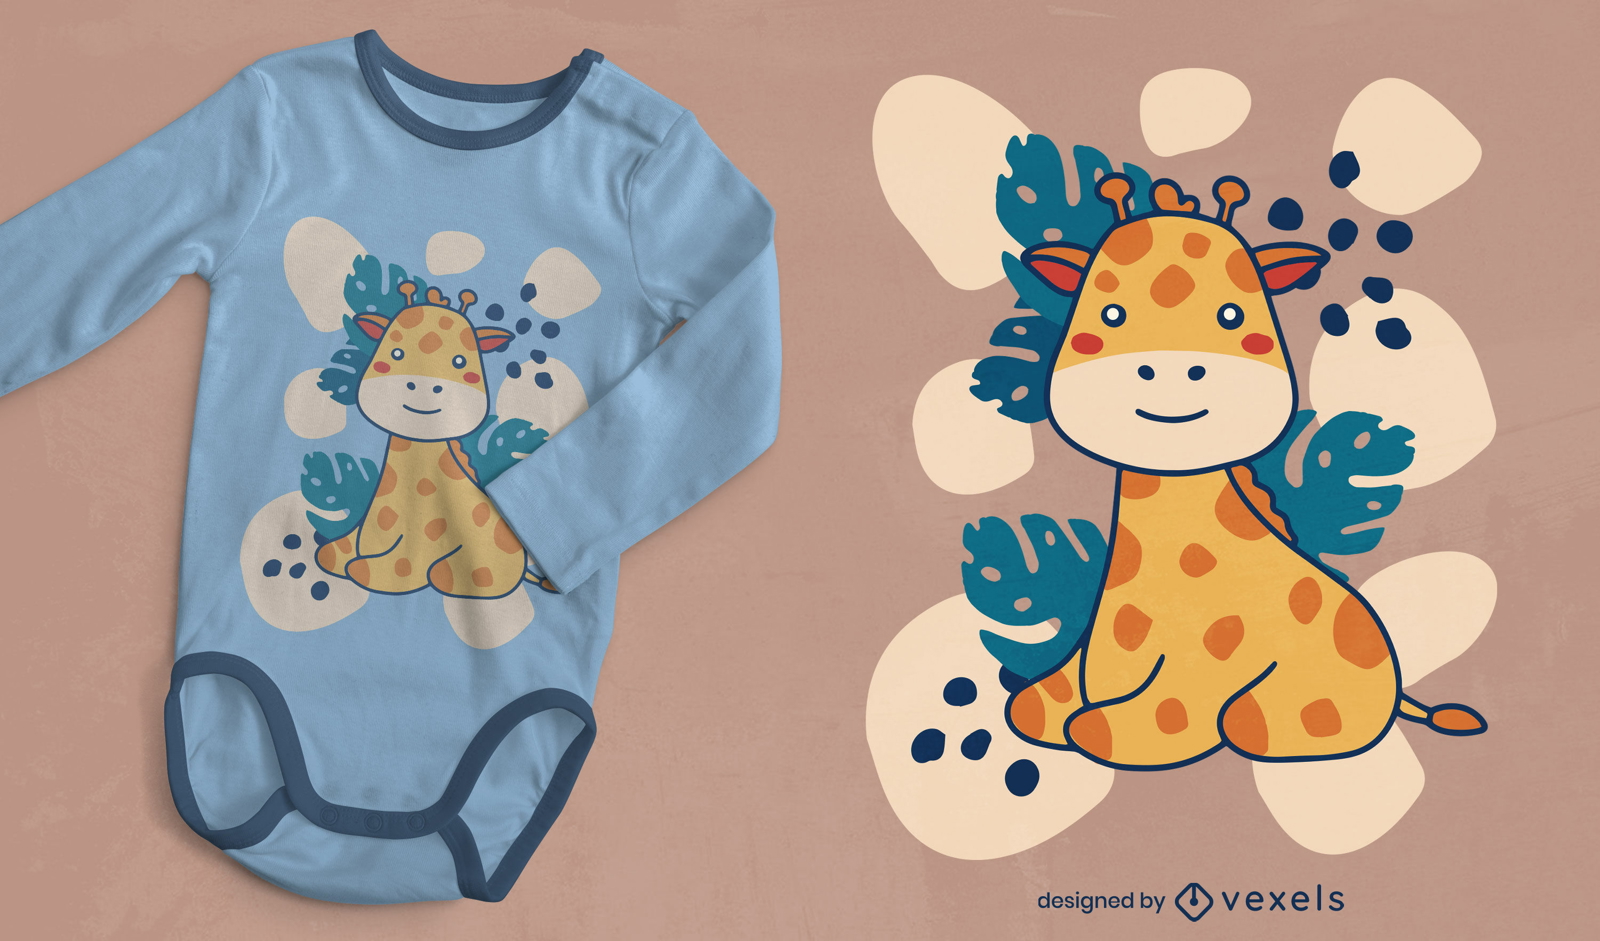 Baby giraffe and leaves t-shirt design